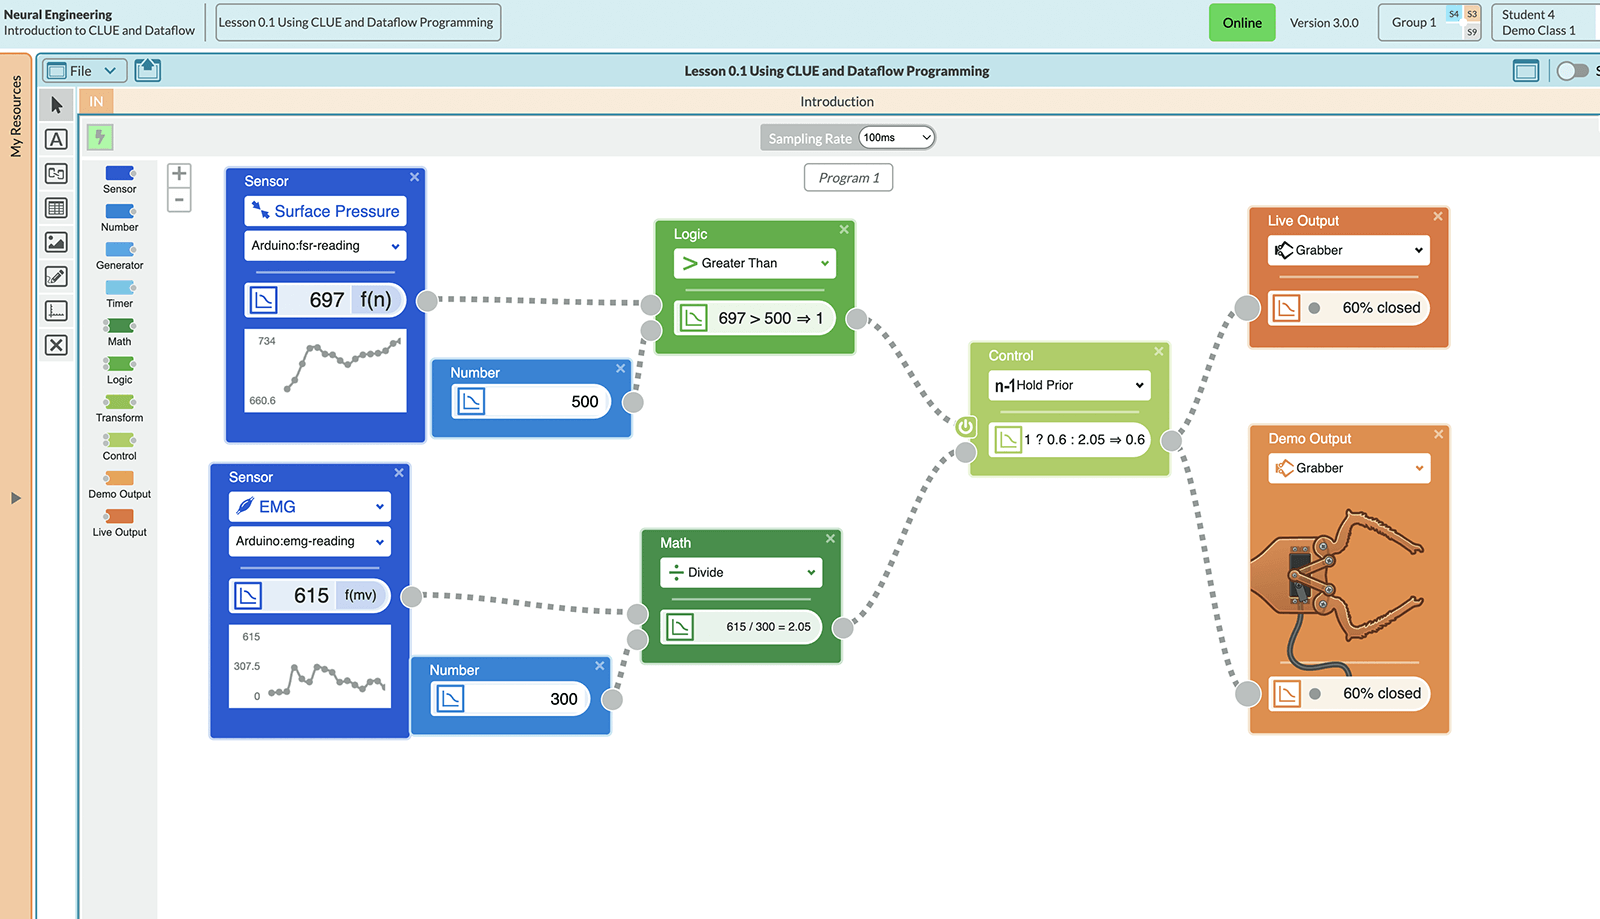 A Dataflow program to control the Grabber.